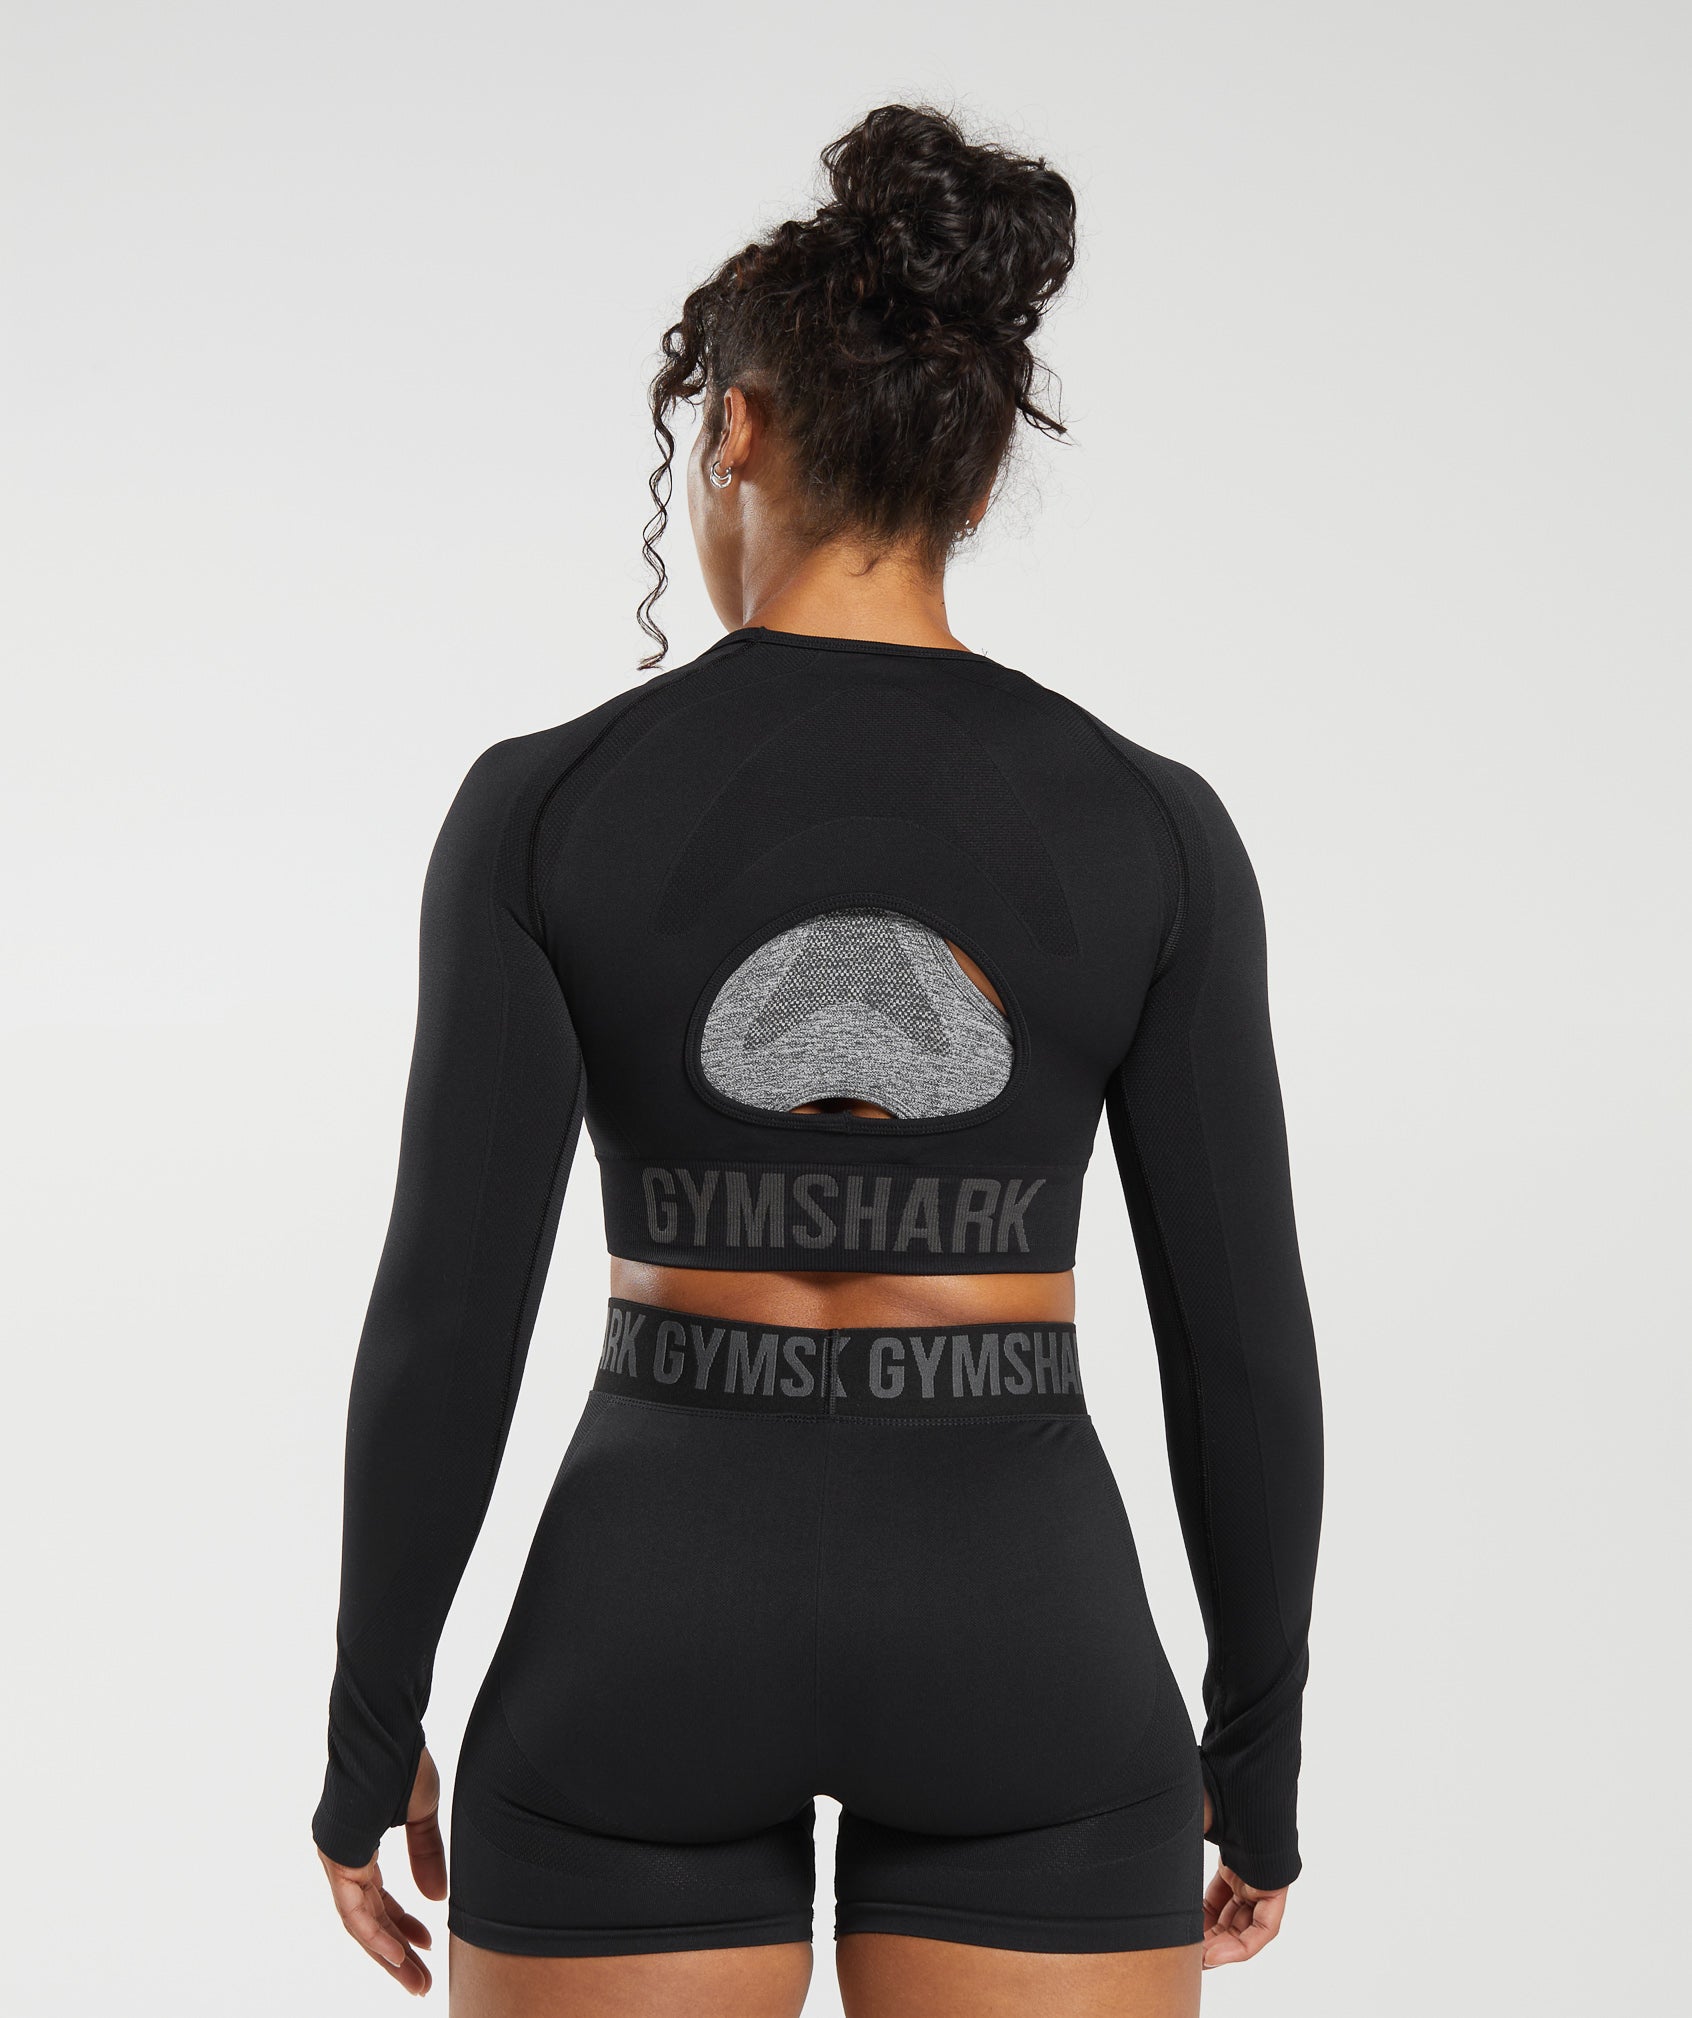 Gymshark flex strappy sports bra - charcoal grey, Women's Fashion